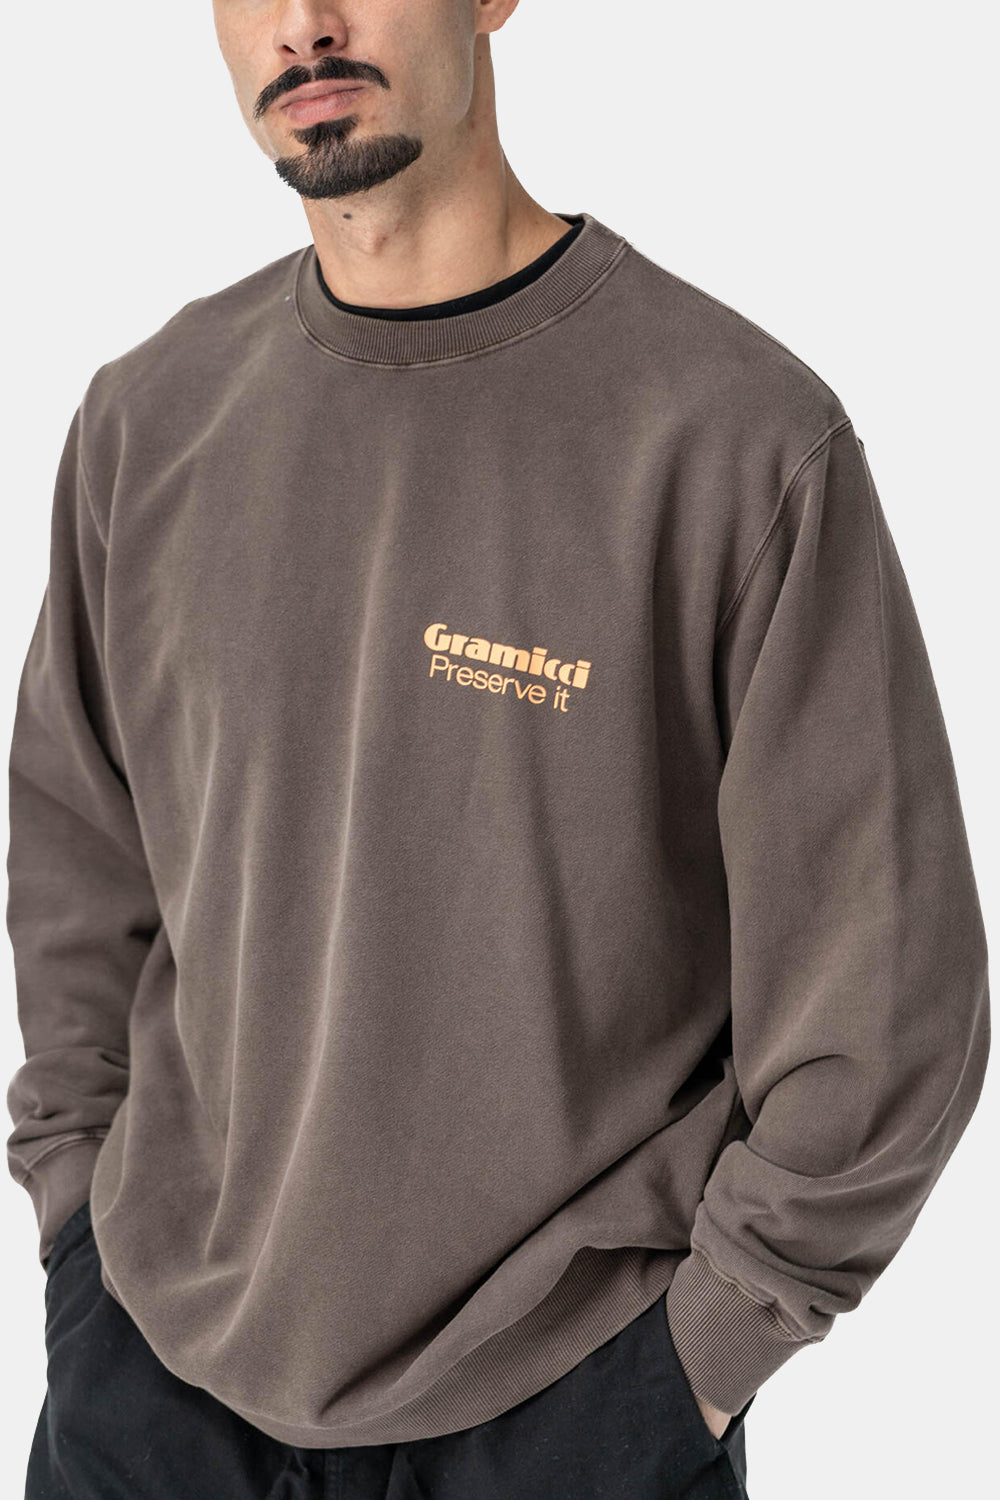 Gramicci Preserve-it Sweatshirt (brun pigment)